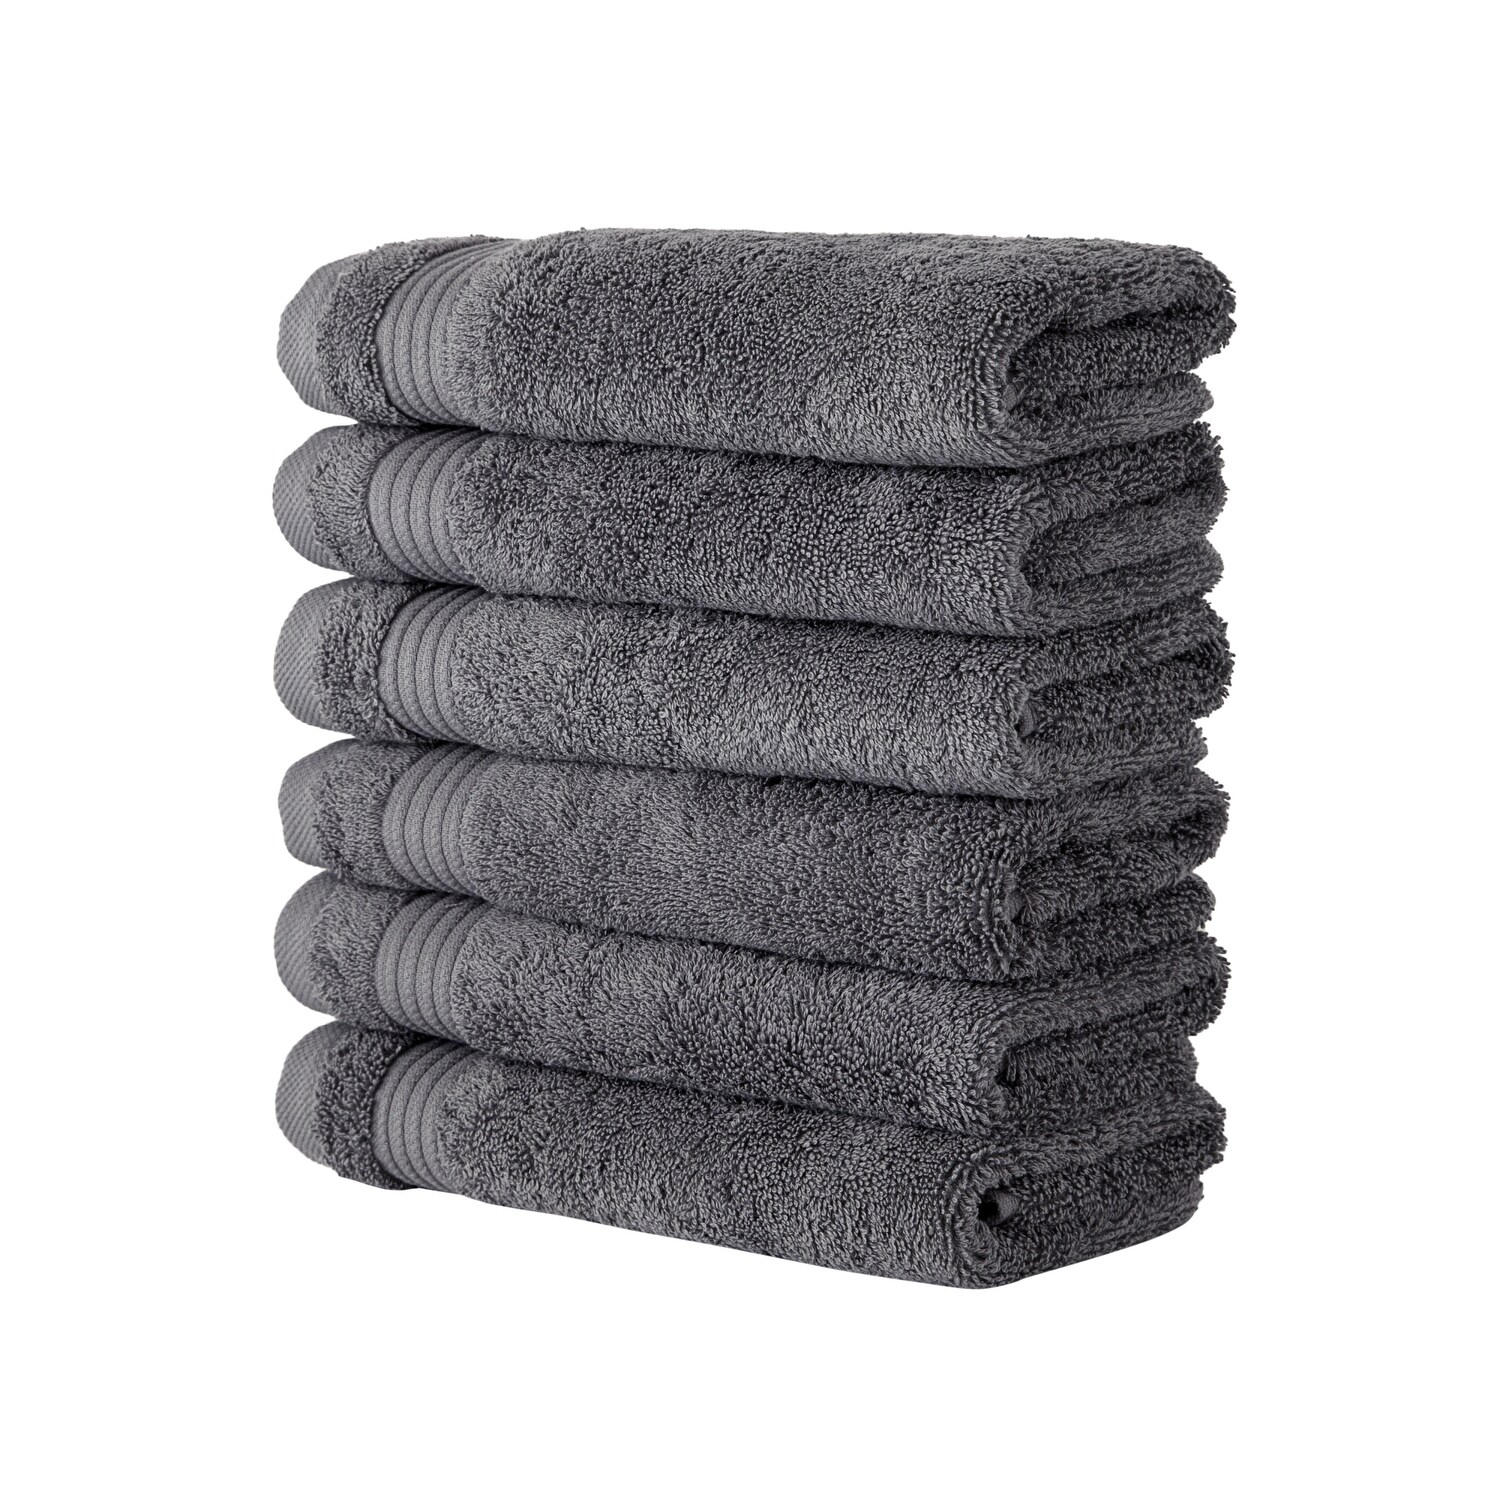 https://ak1.ostkcdn.com/images/products/is/images/direct/7251f731f78f2288c3d00686fff83300a5b11fa4/Classic-Turkish-Towels-Amadeus-Hand-Towel-16x27.jpg